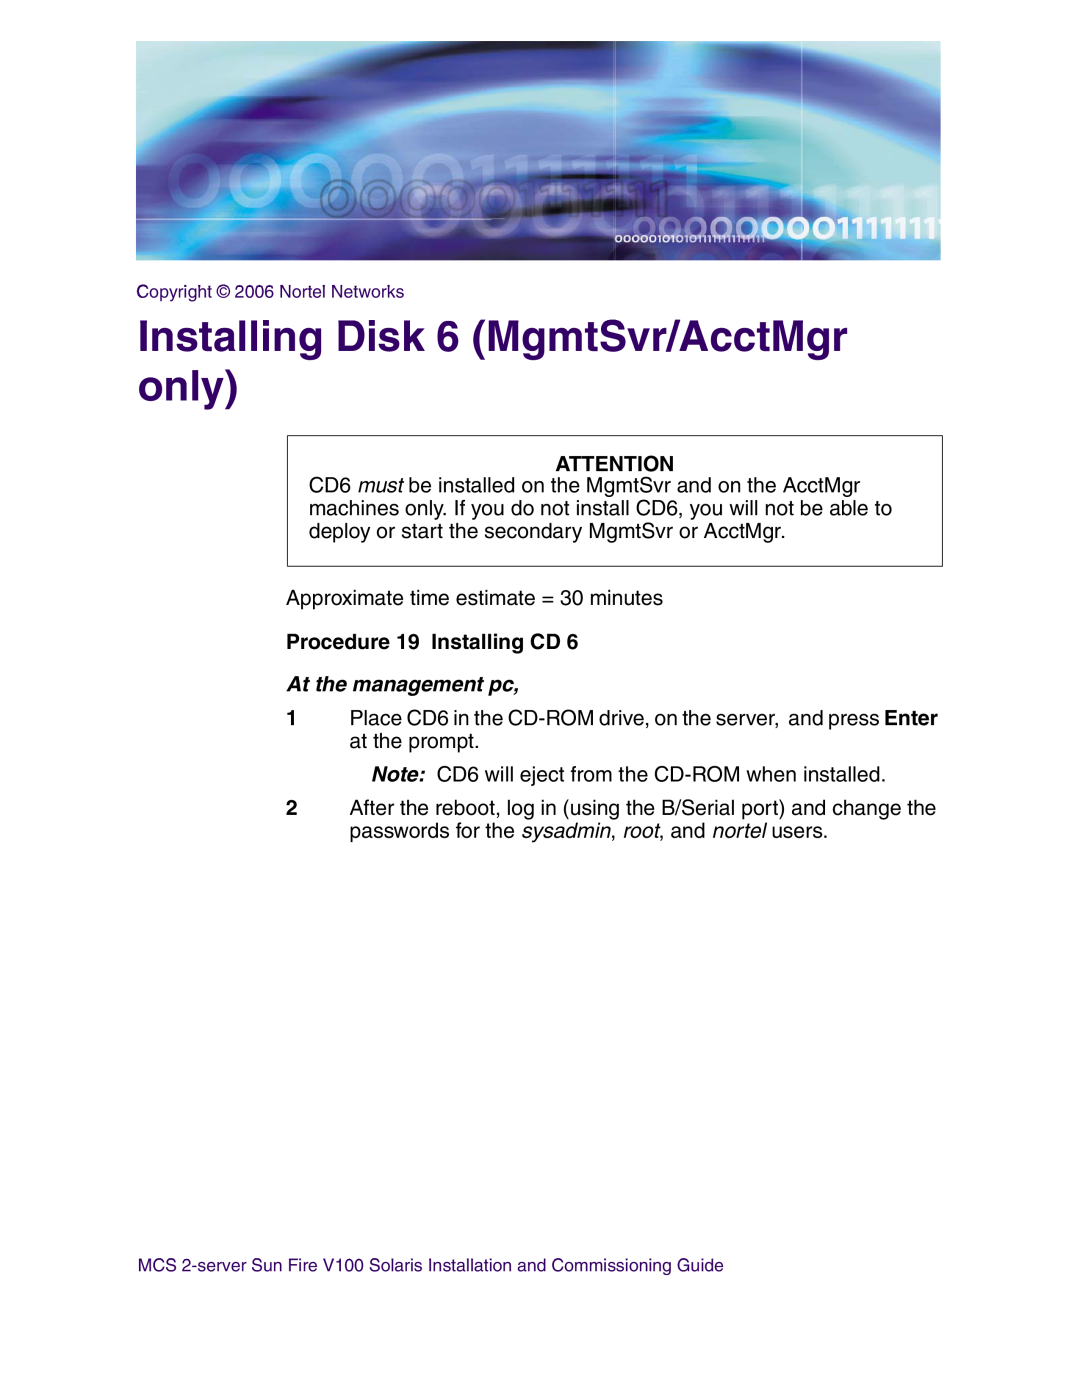 Nortel Networks V100 manual Installing Disk 6 MgmtSvr/AcctMgr only, Procedure 19 Installing CD, At the management pc 